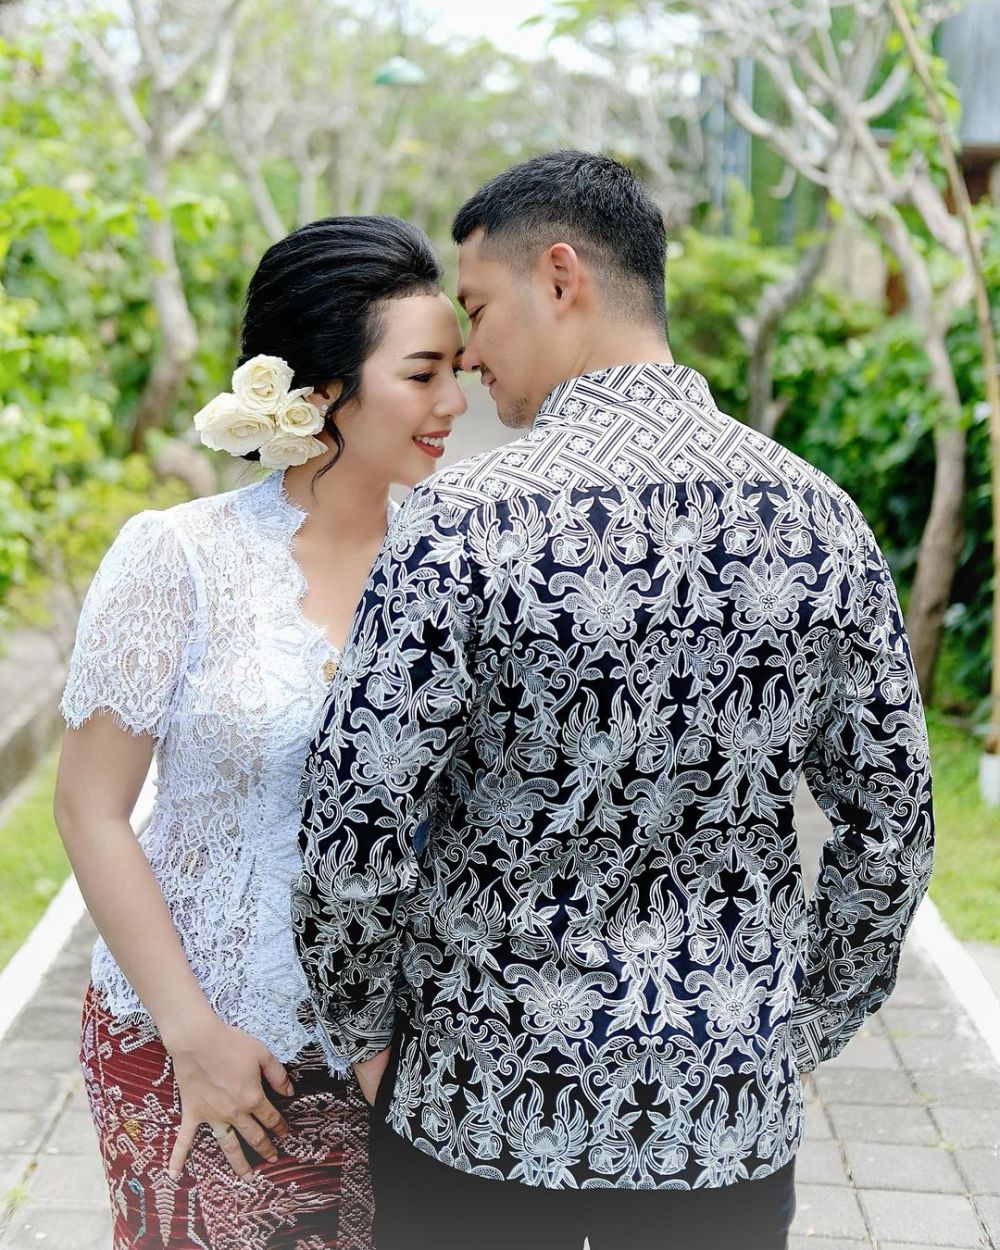 Unggah foto mesra bak pengantin, Angga Wijaya eks suami Dewi Perssik & kekasih banjir ucapan selamat